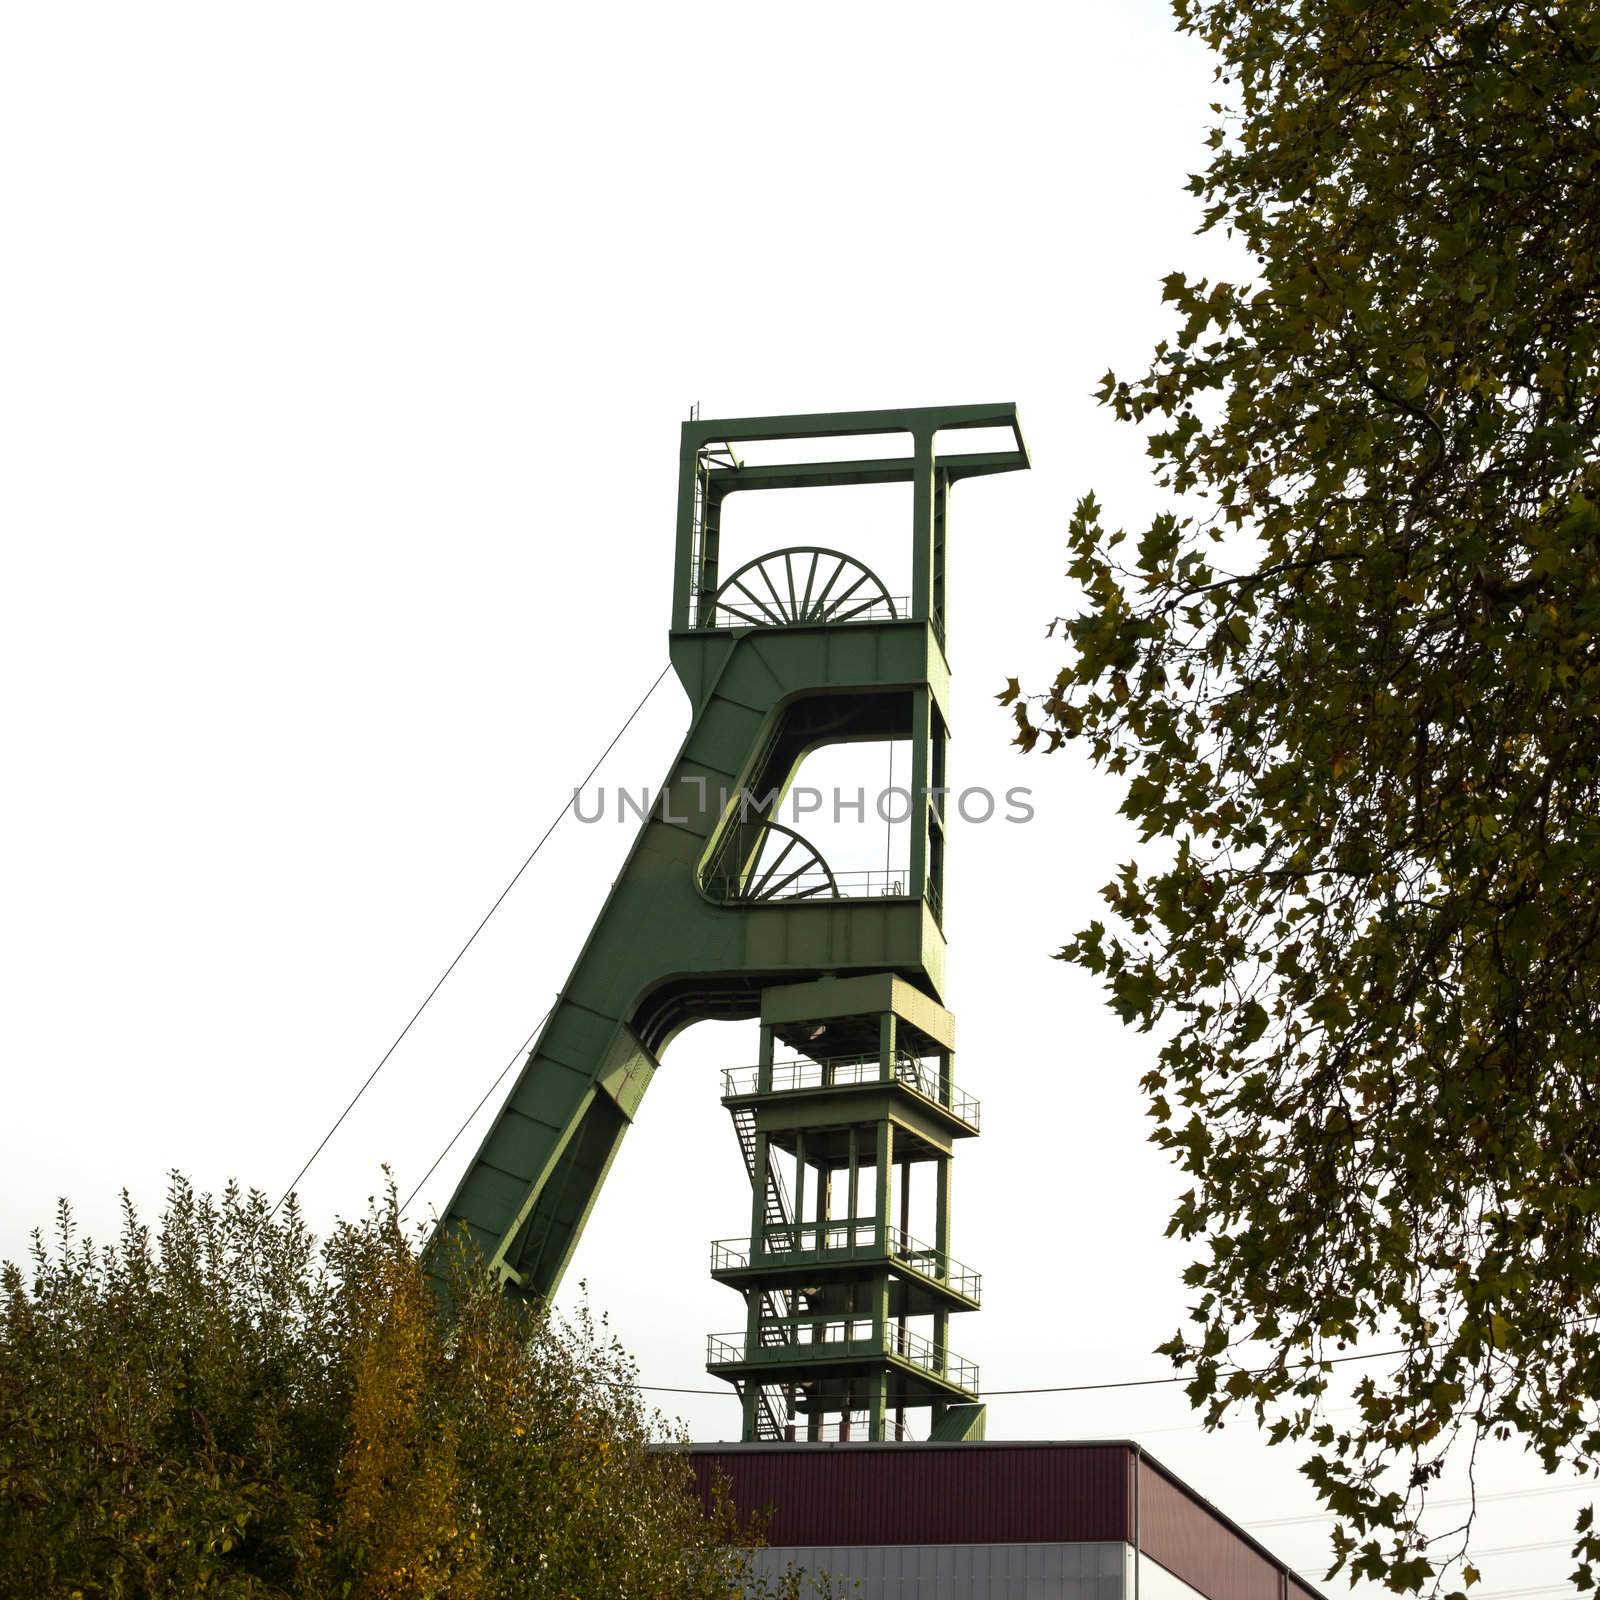 Coal mine headgear tower by PiLens